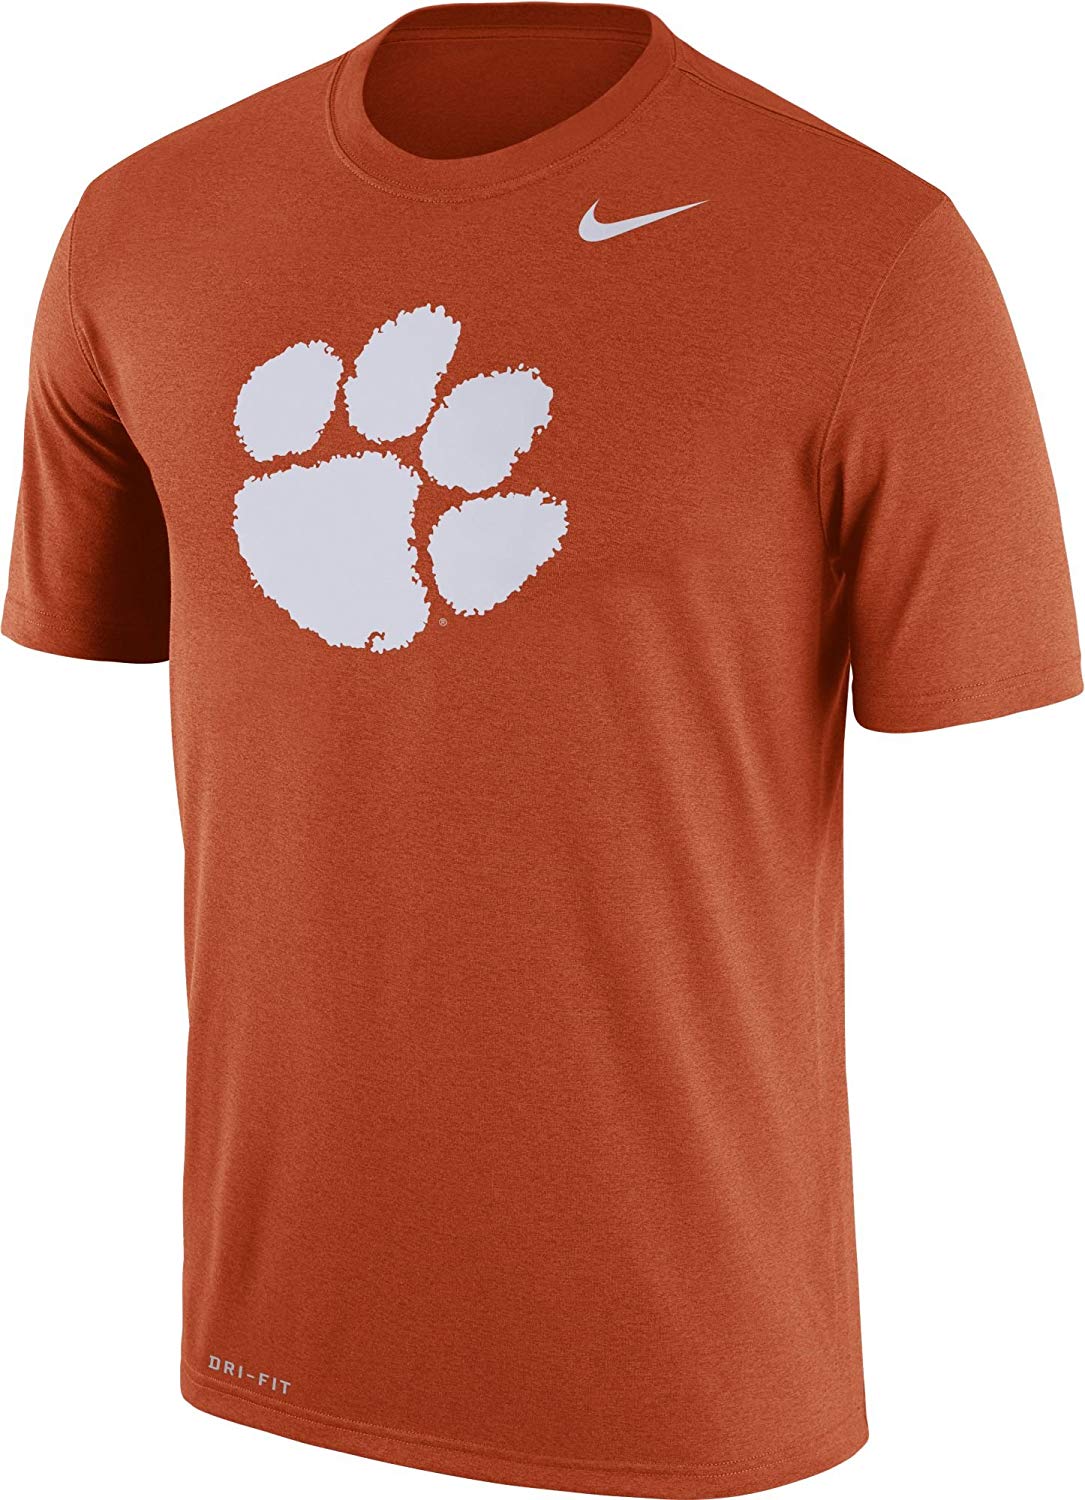 Nike Orange Logo - Amazon.com : NIKE Men's Clemson Tigers Orange Logo Dry Legend T ...